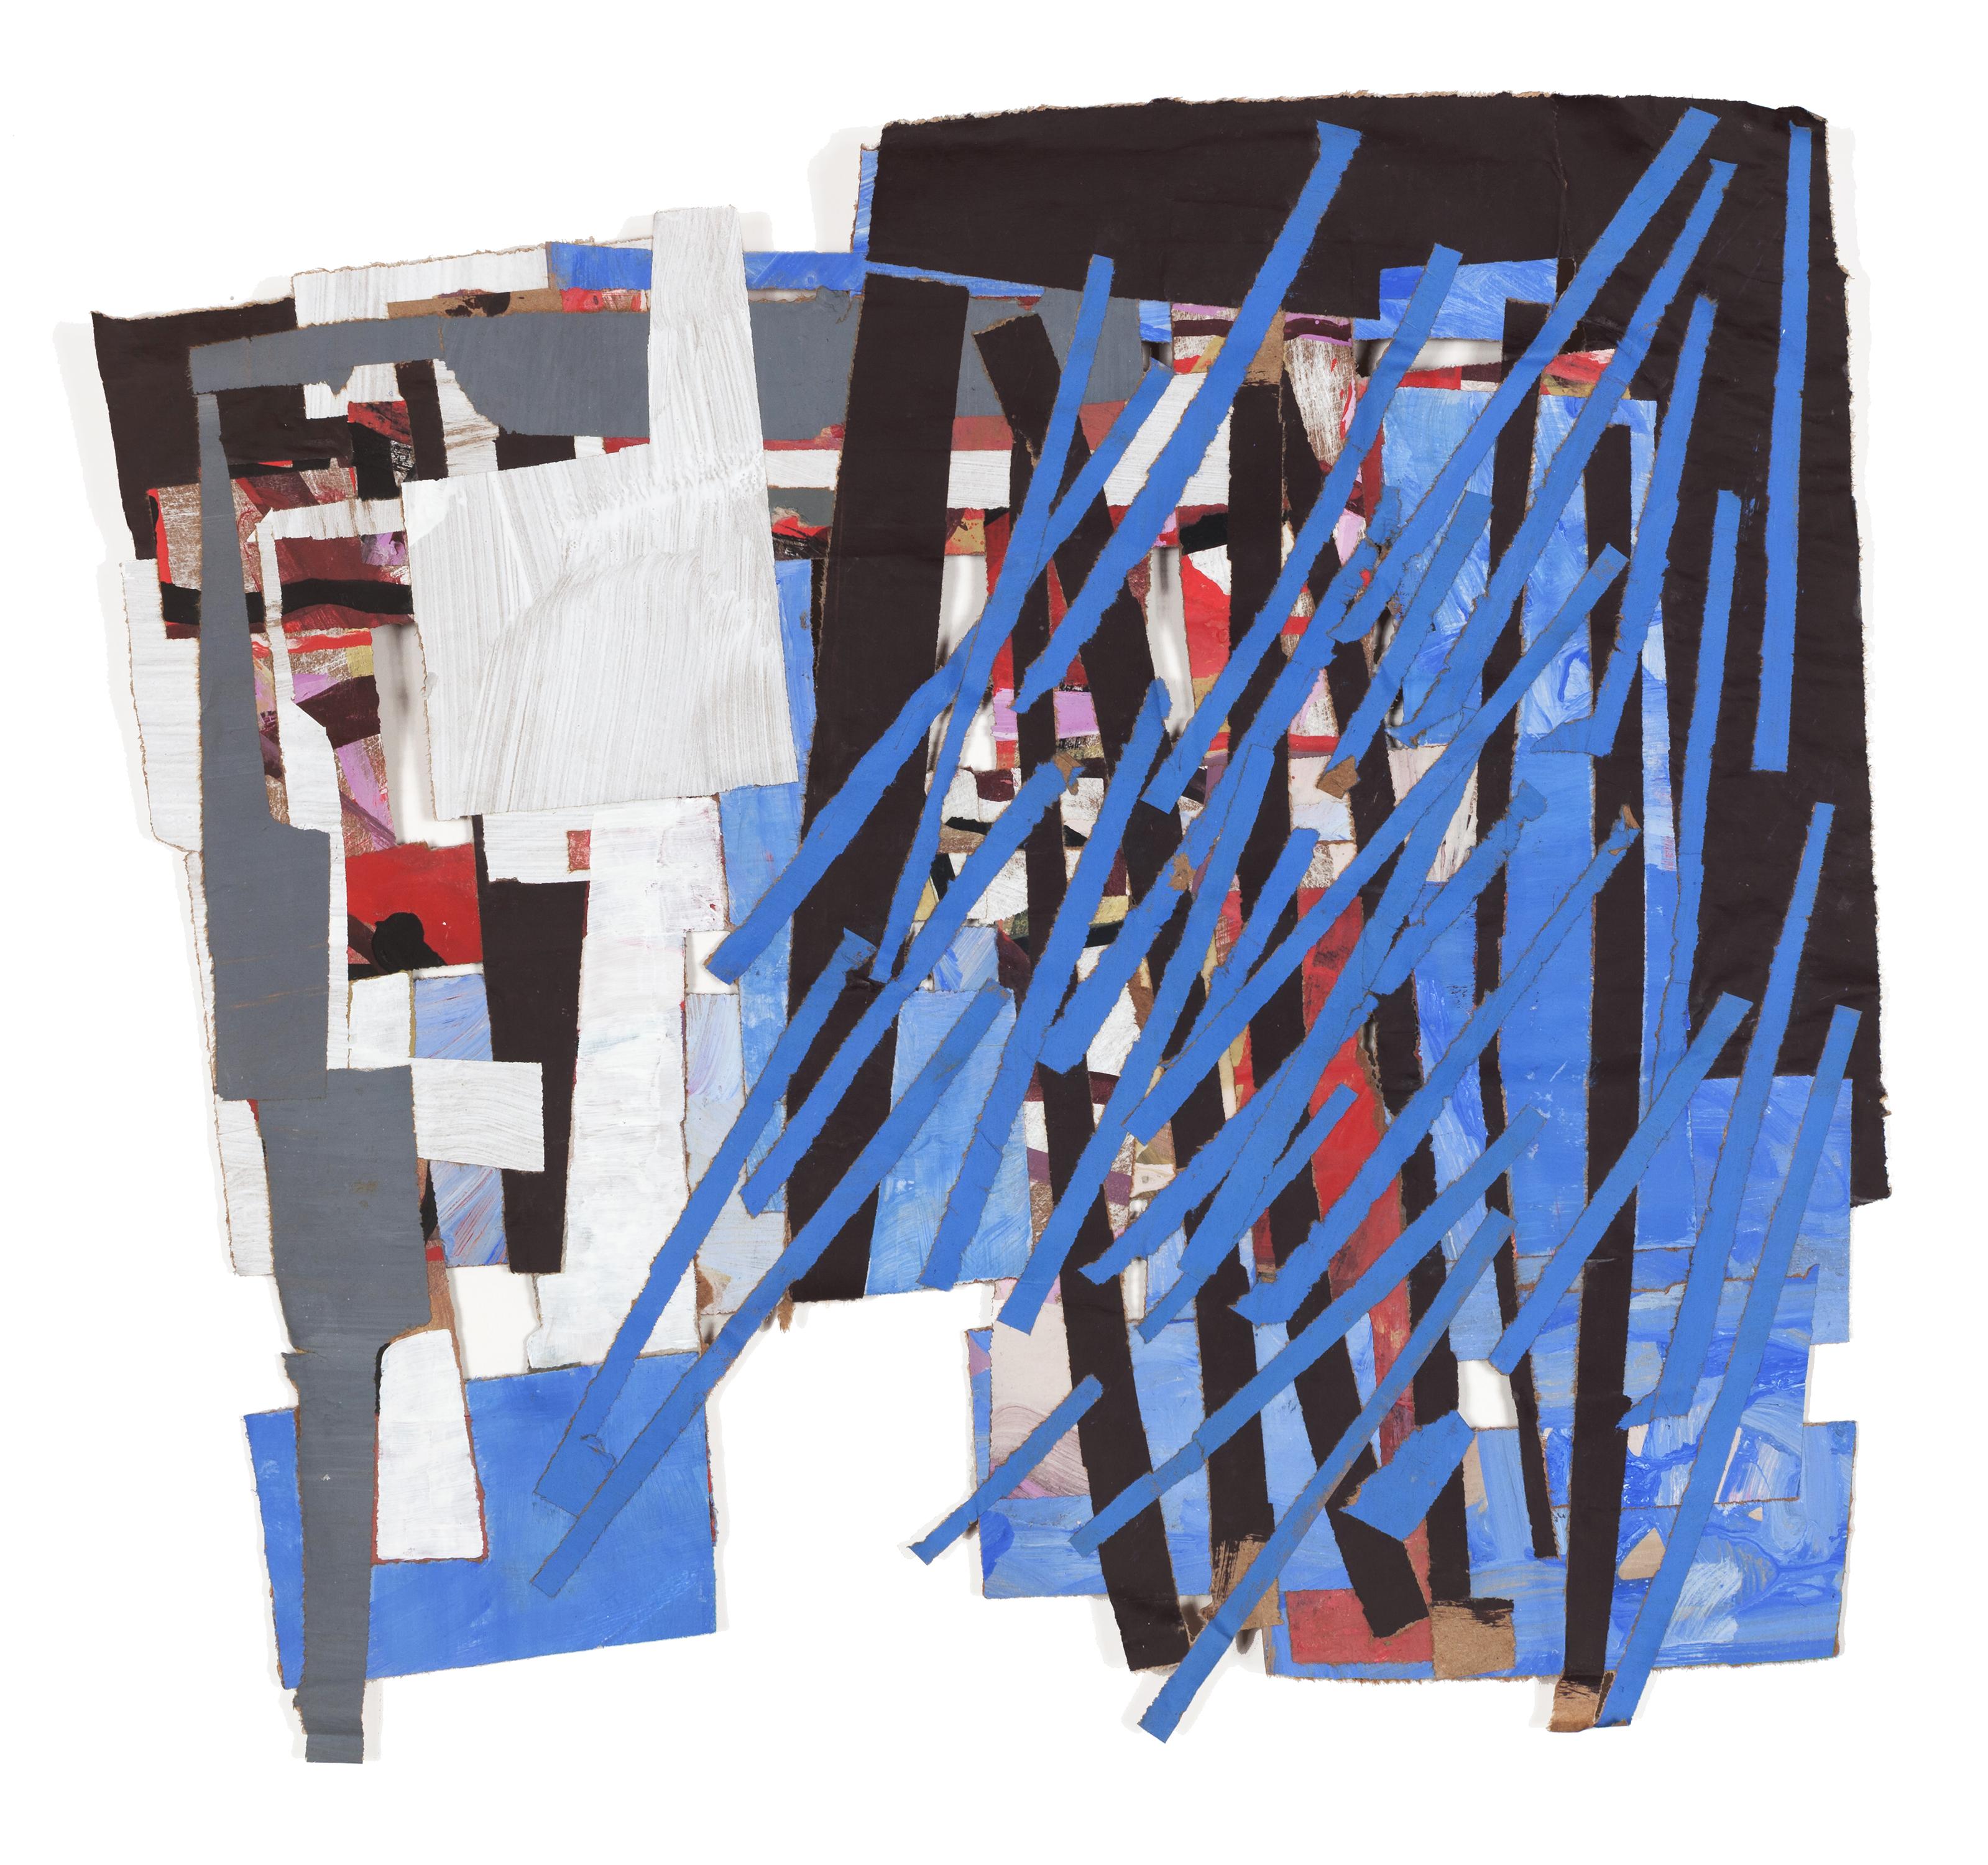 "Bluroon" - Non-Objective Colorful Paper Collage - Diebenkorn - Mixed Media Art by Aimée Farnet Siegel